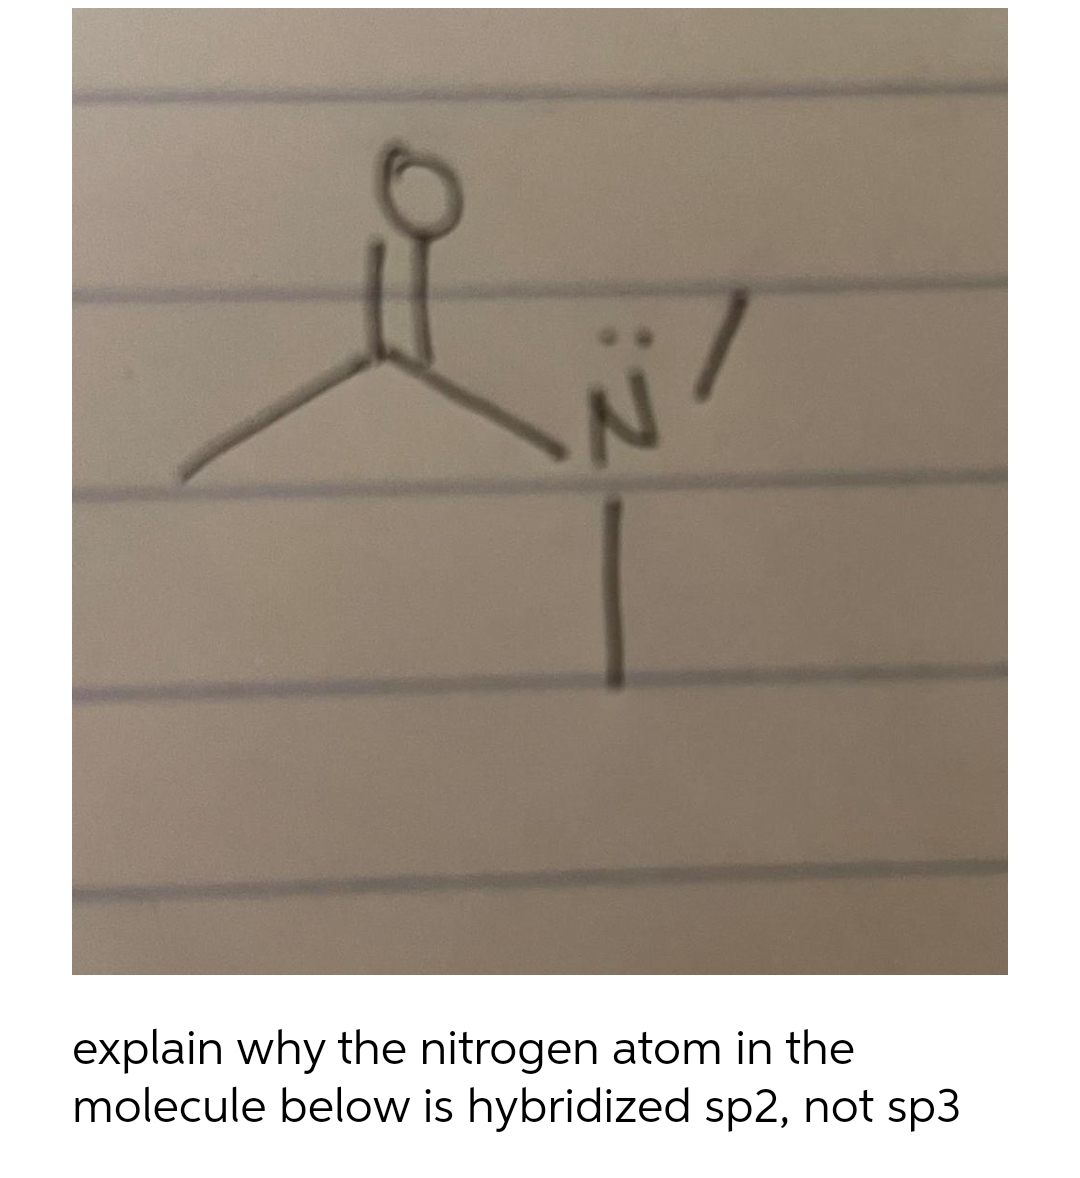 2
explain why the nitrogen atom in the
molecule below is hybridized sp2, not sp3